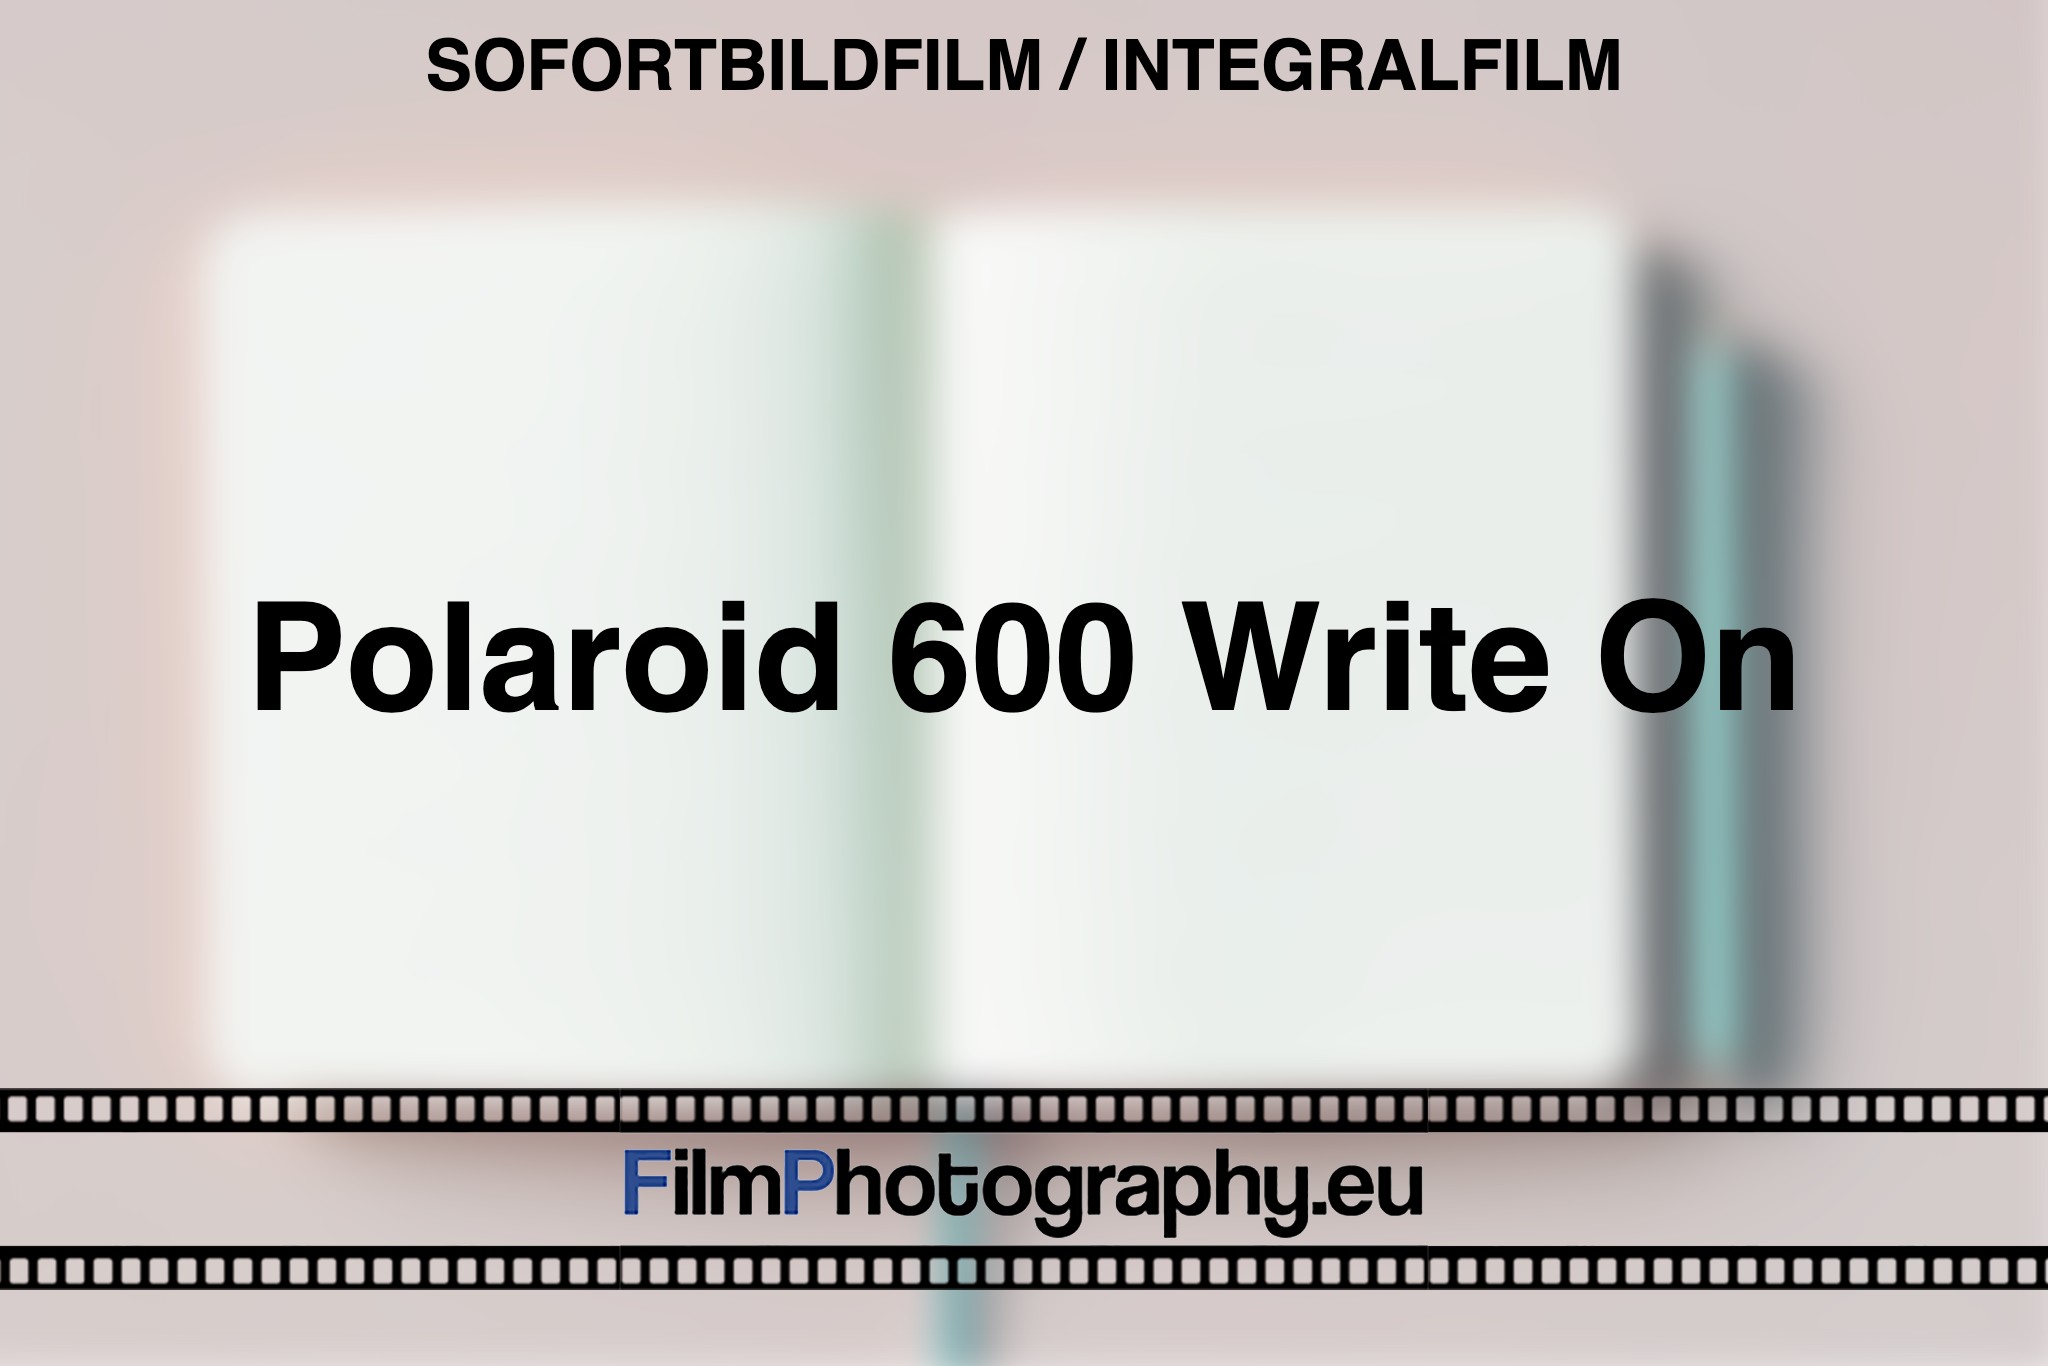 polaroid-600-write-on-sofortbildfilm-integralfilm-fp-bnv